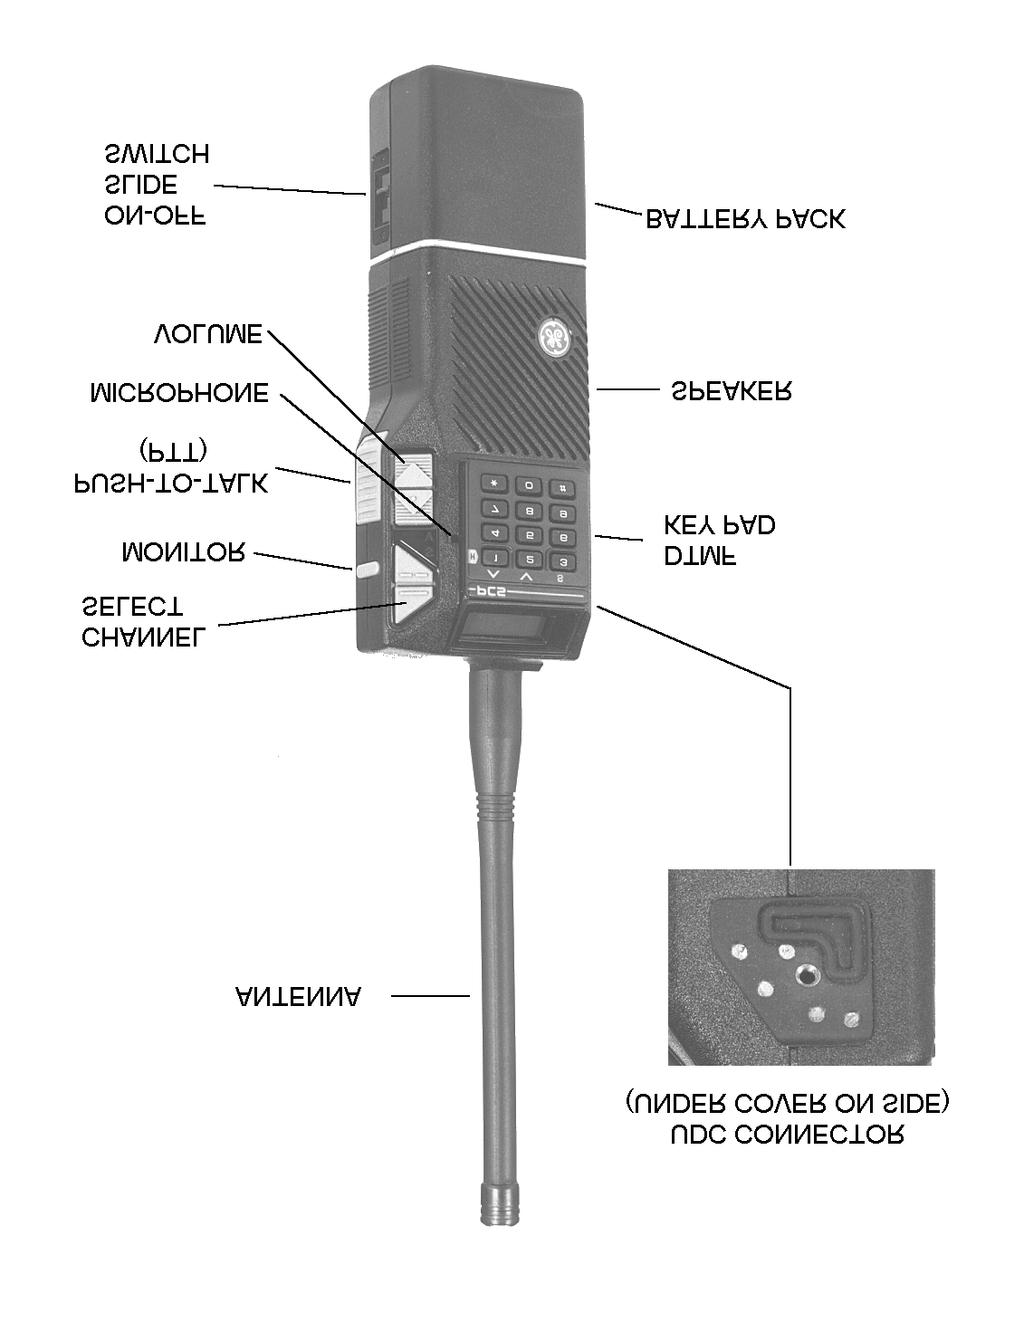 Figure 1 - Dual Format PCS Radio (SCAN)